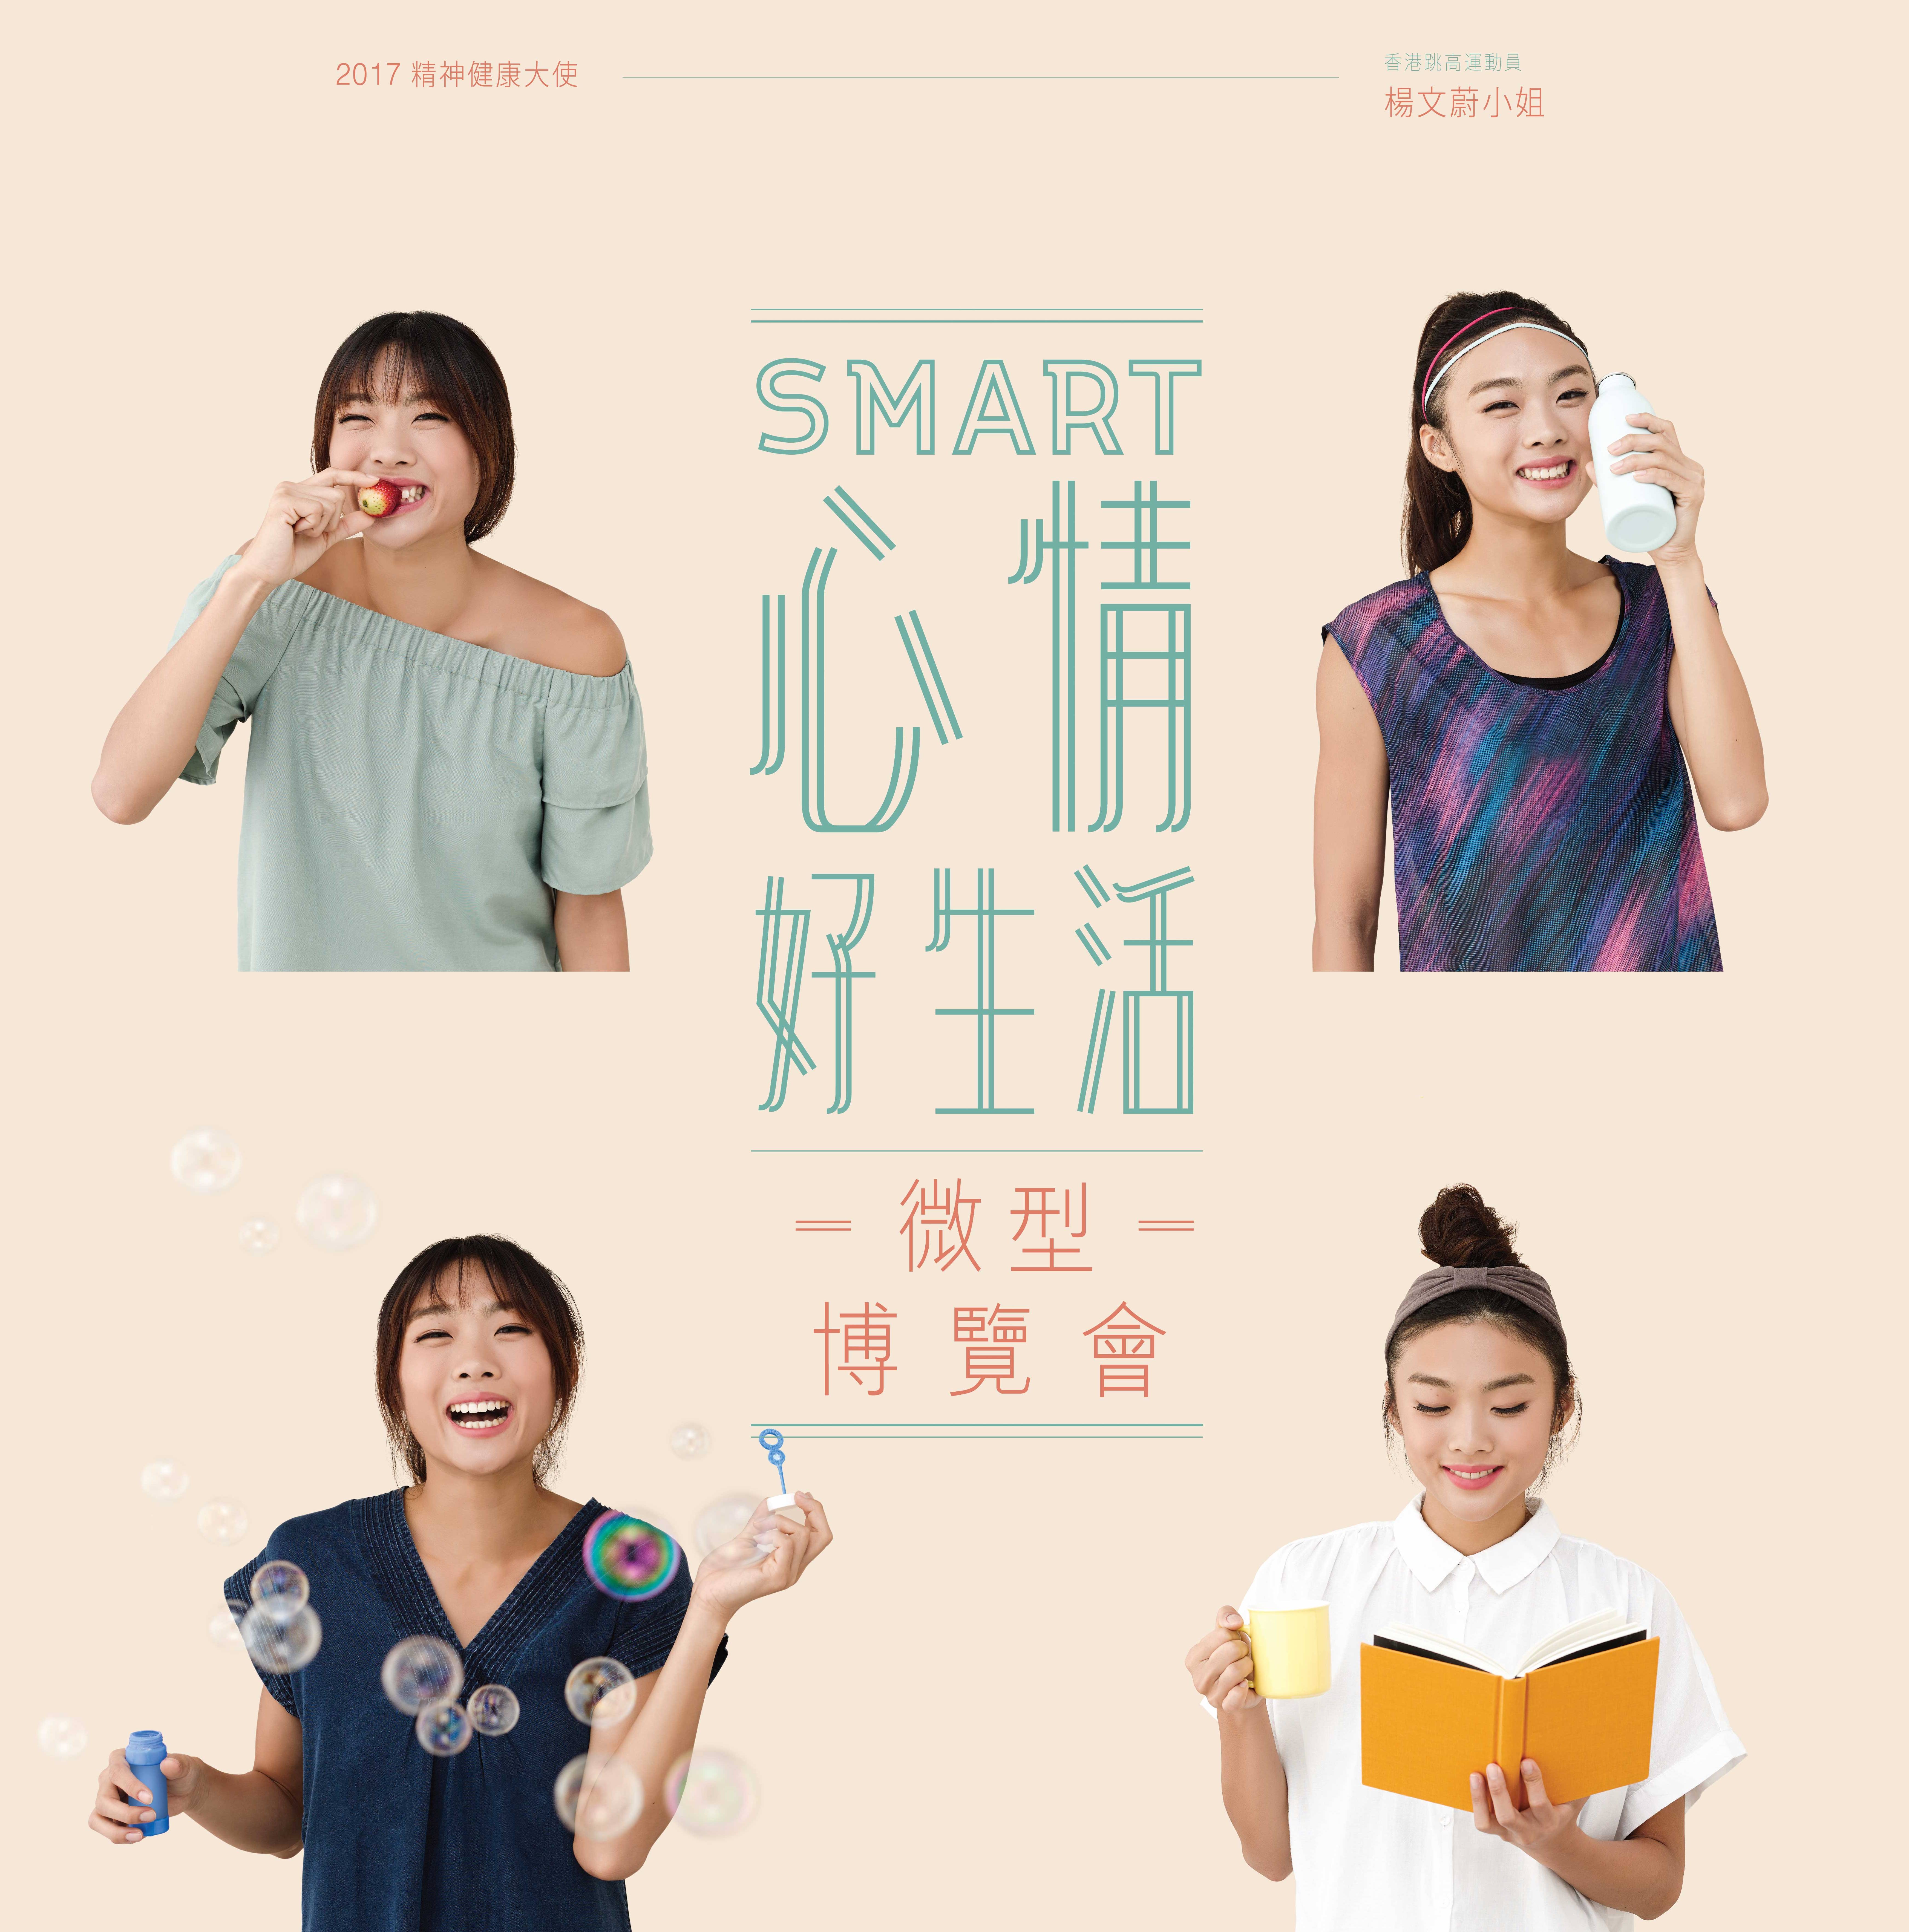 「Smart 心情 • 好生活」微型博覽會會宣傳海報